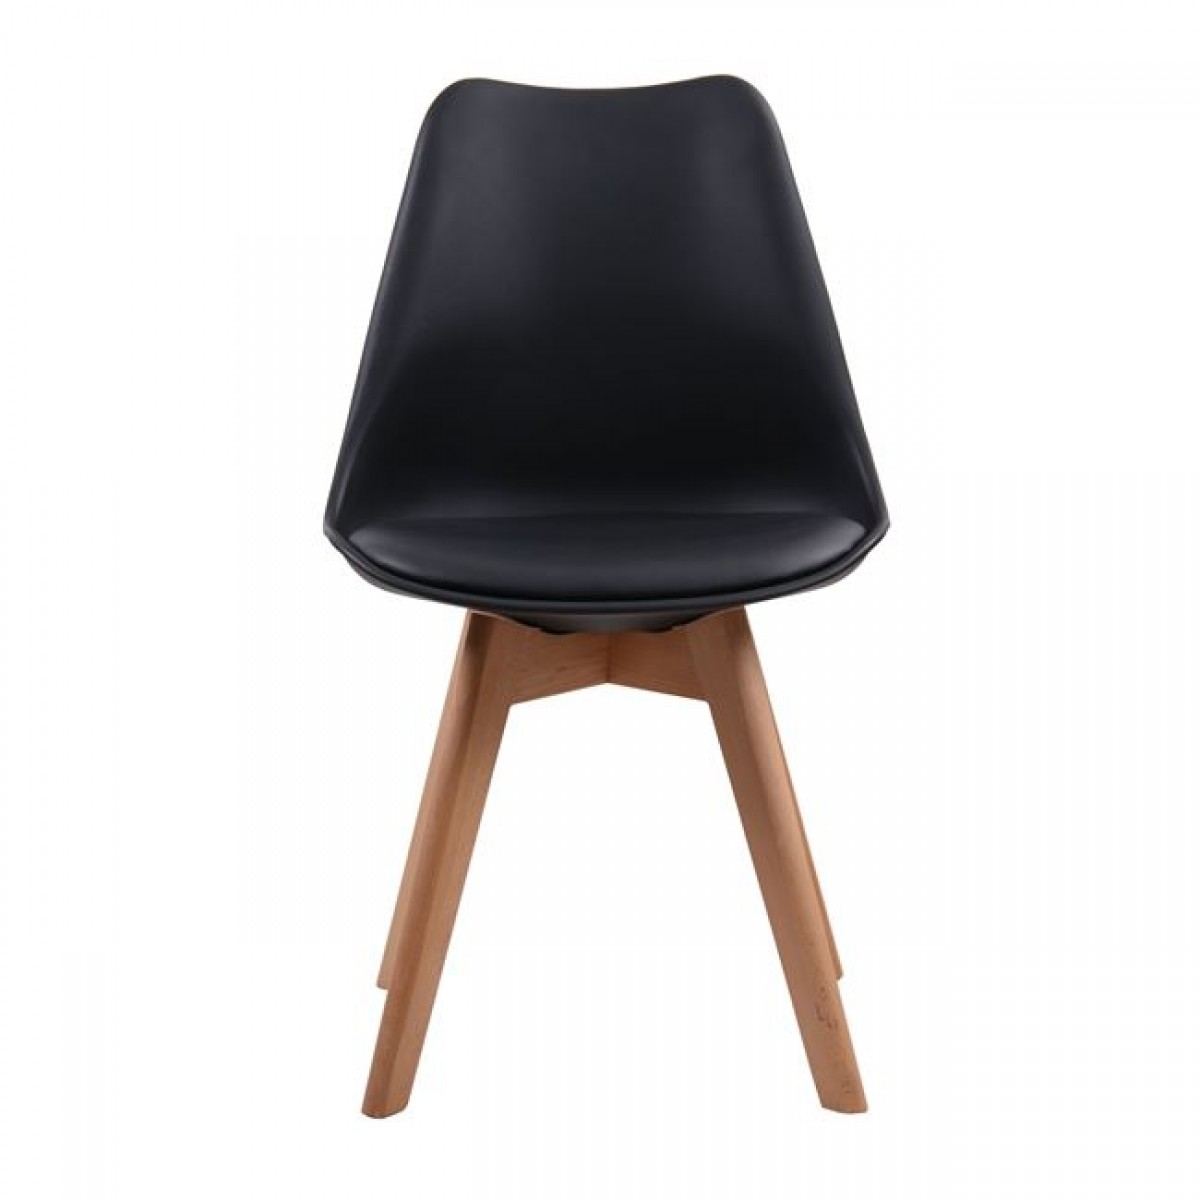 Martin μαύρη καρέκλα pp με ξύλινη βάση